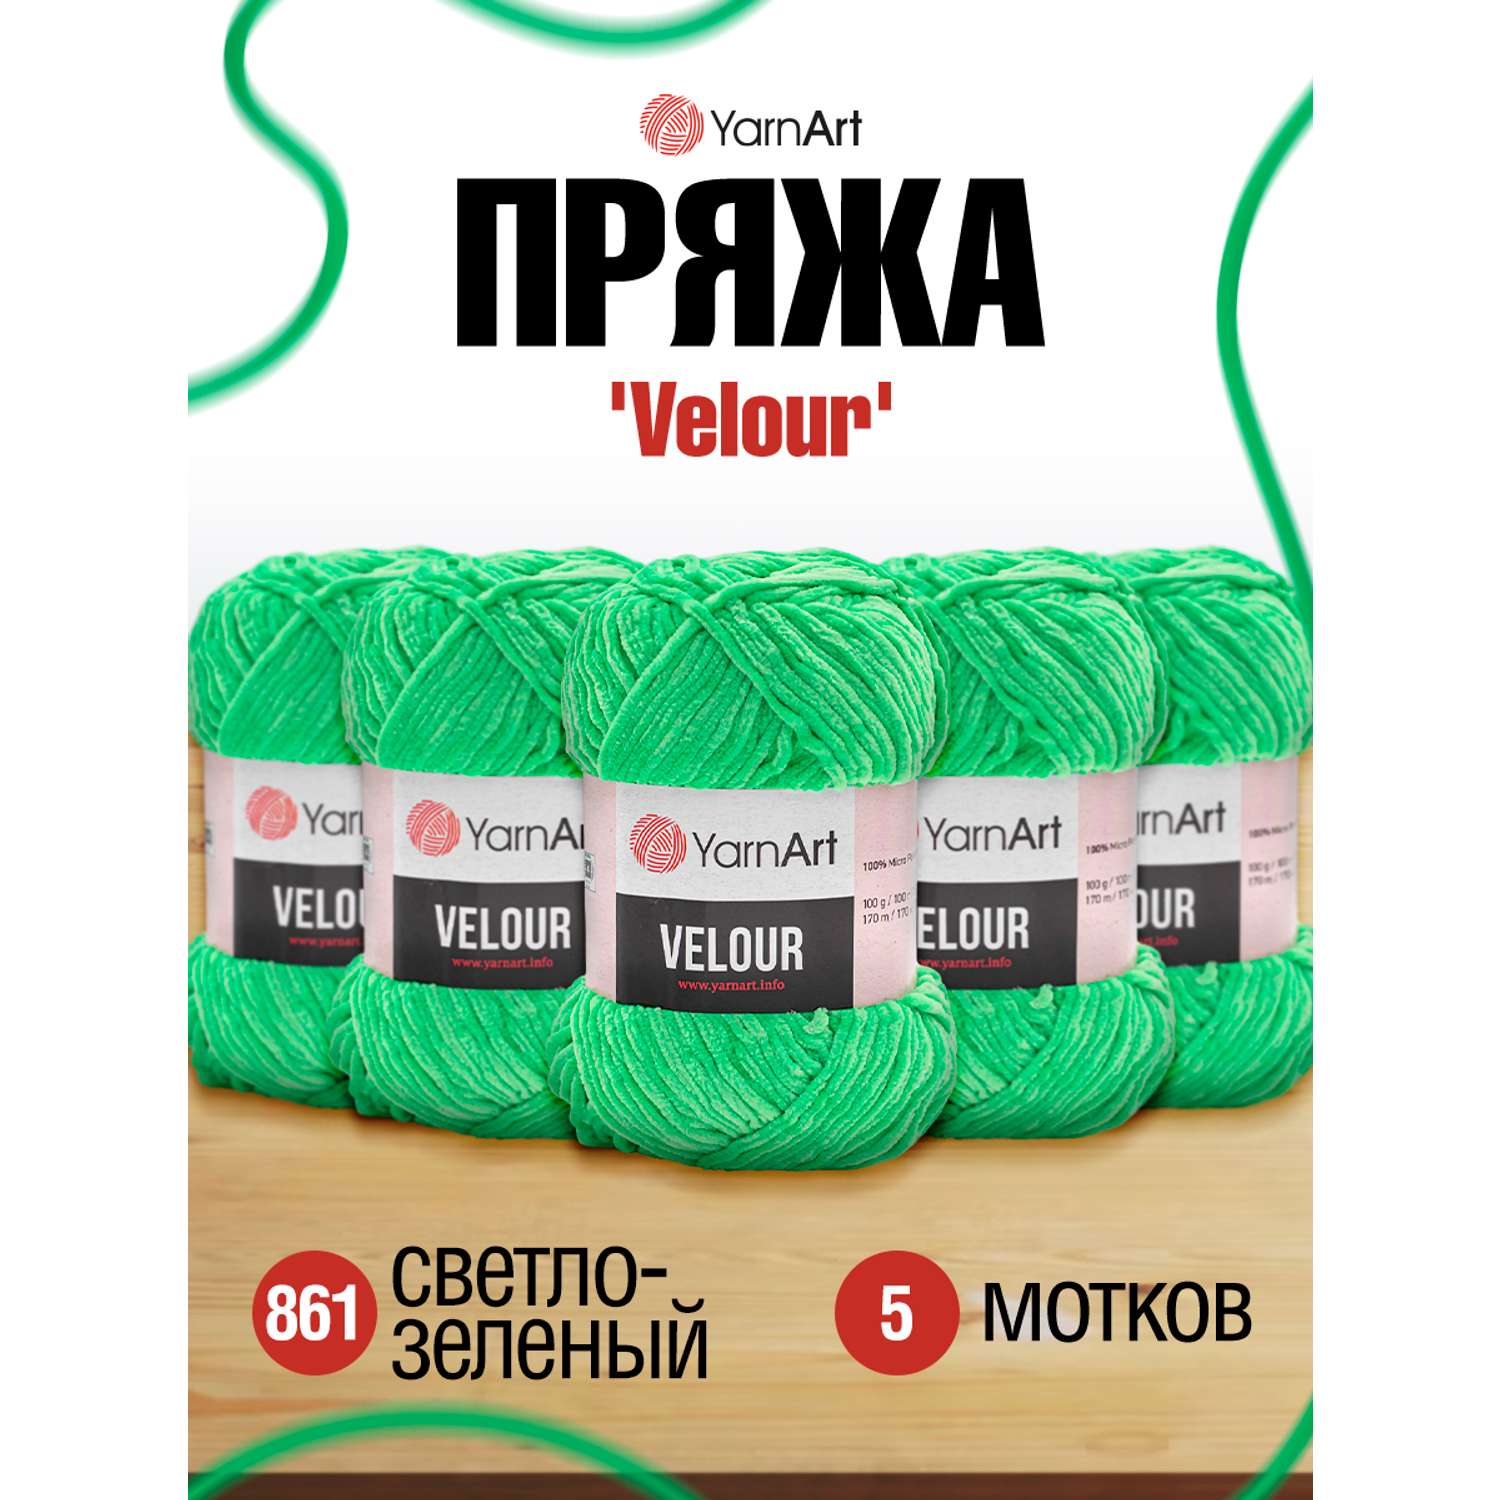 Пряжа для вязания YarnArt Velour 100 г 170 м микрополиэстер мягкая велюровая 5 мотков 861 светло-зеленый - фото 1